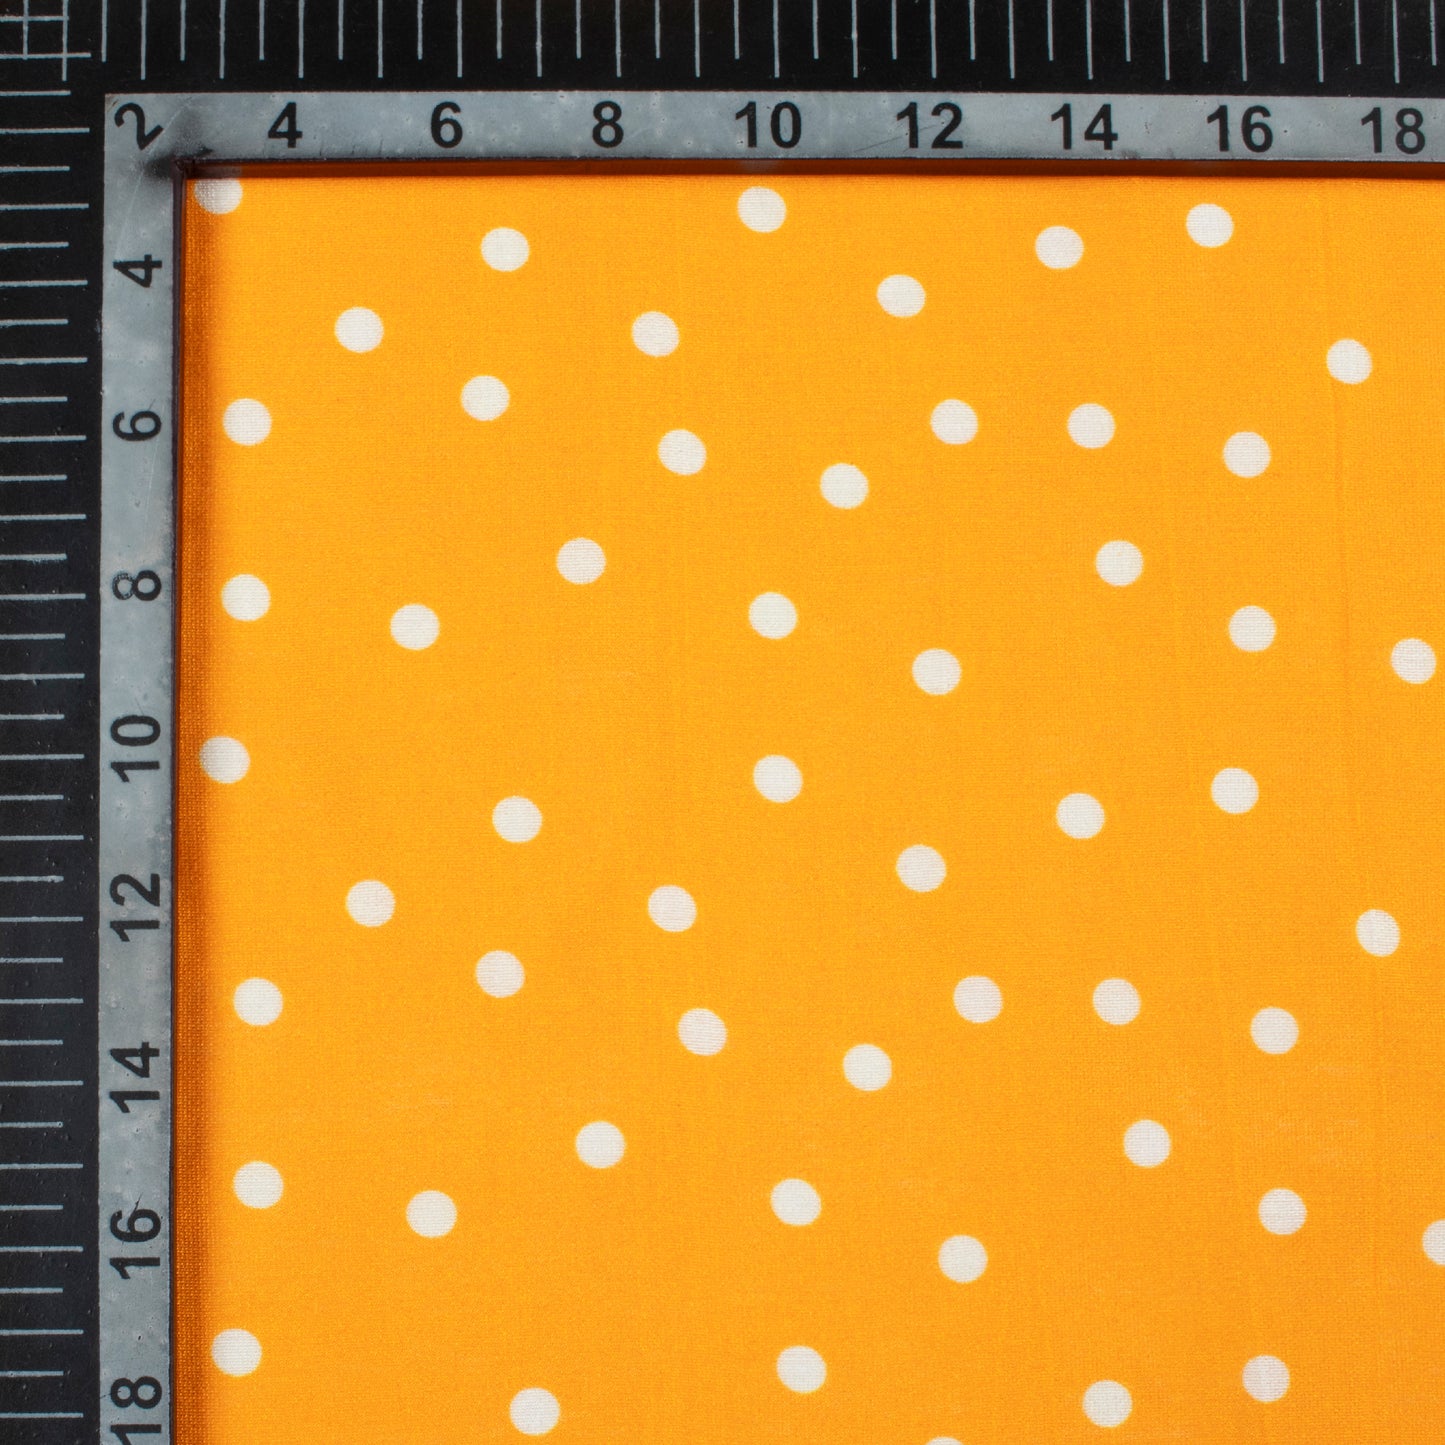 Meri Gold Orange And White Polka Dots Pattern Digital Print Viscose Chanderi Fabric